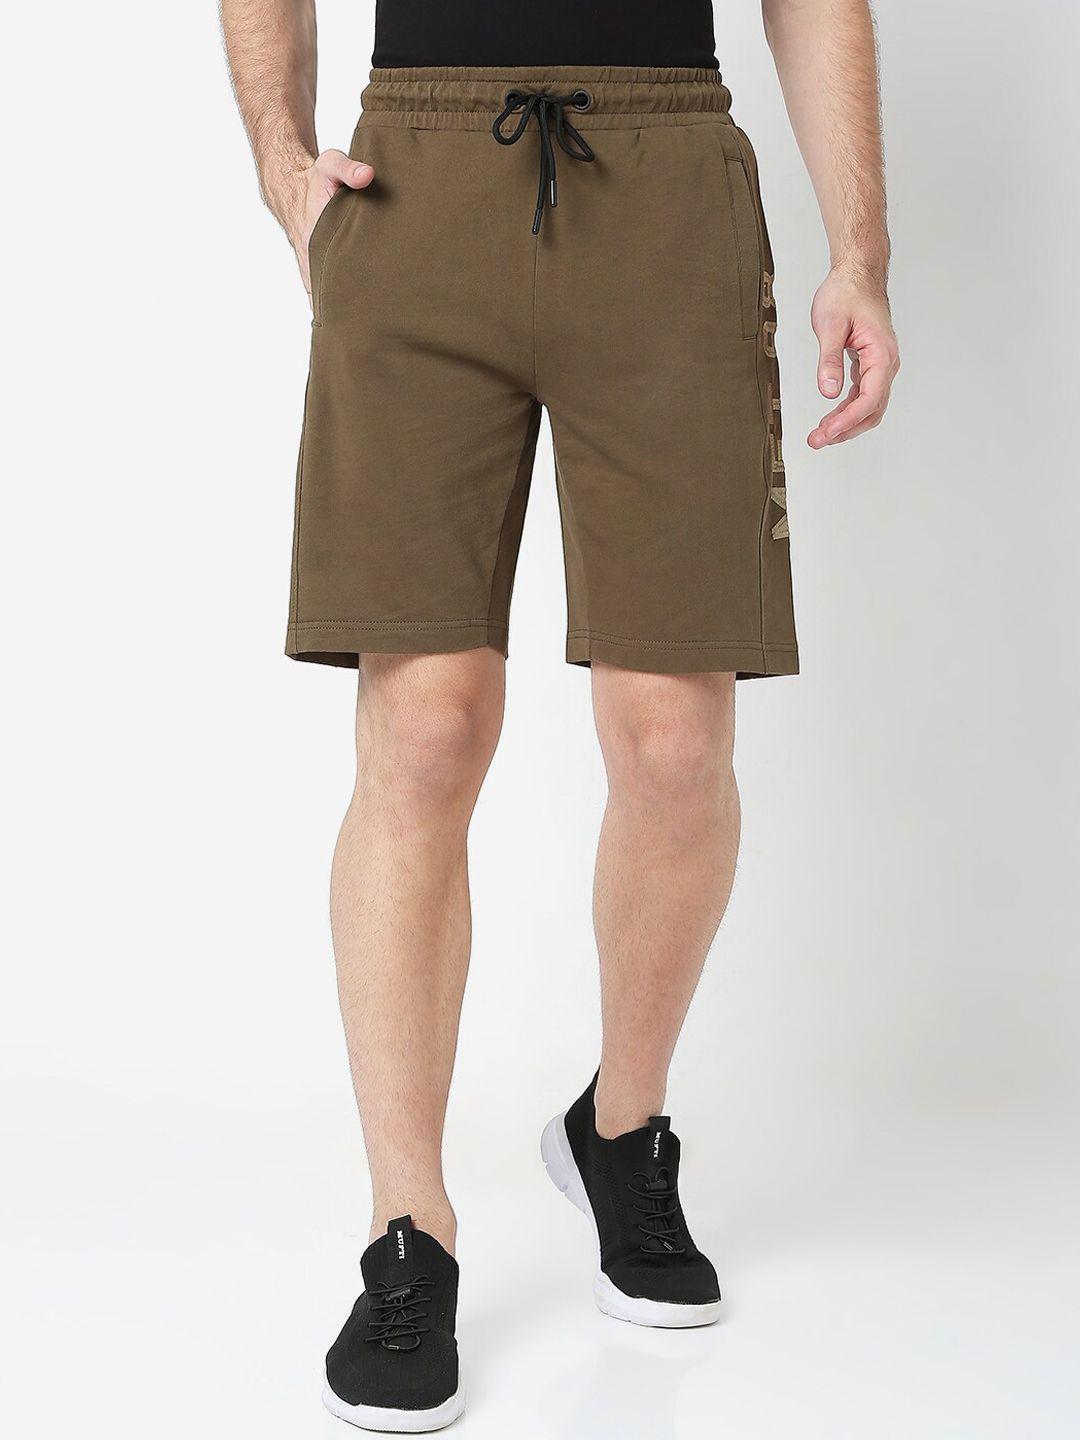 mufti-men-olive-green-cotton-slim-fit-shorts